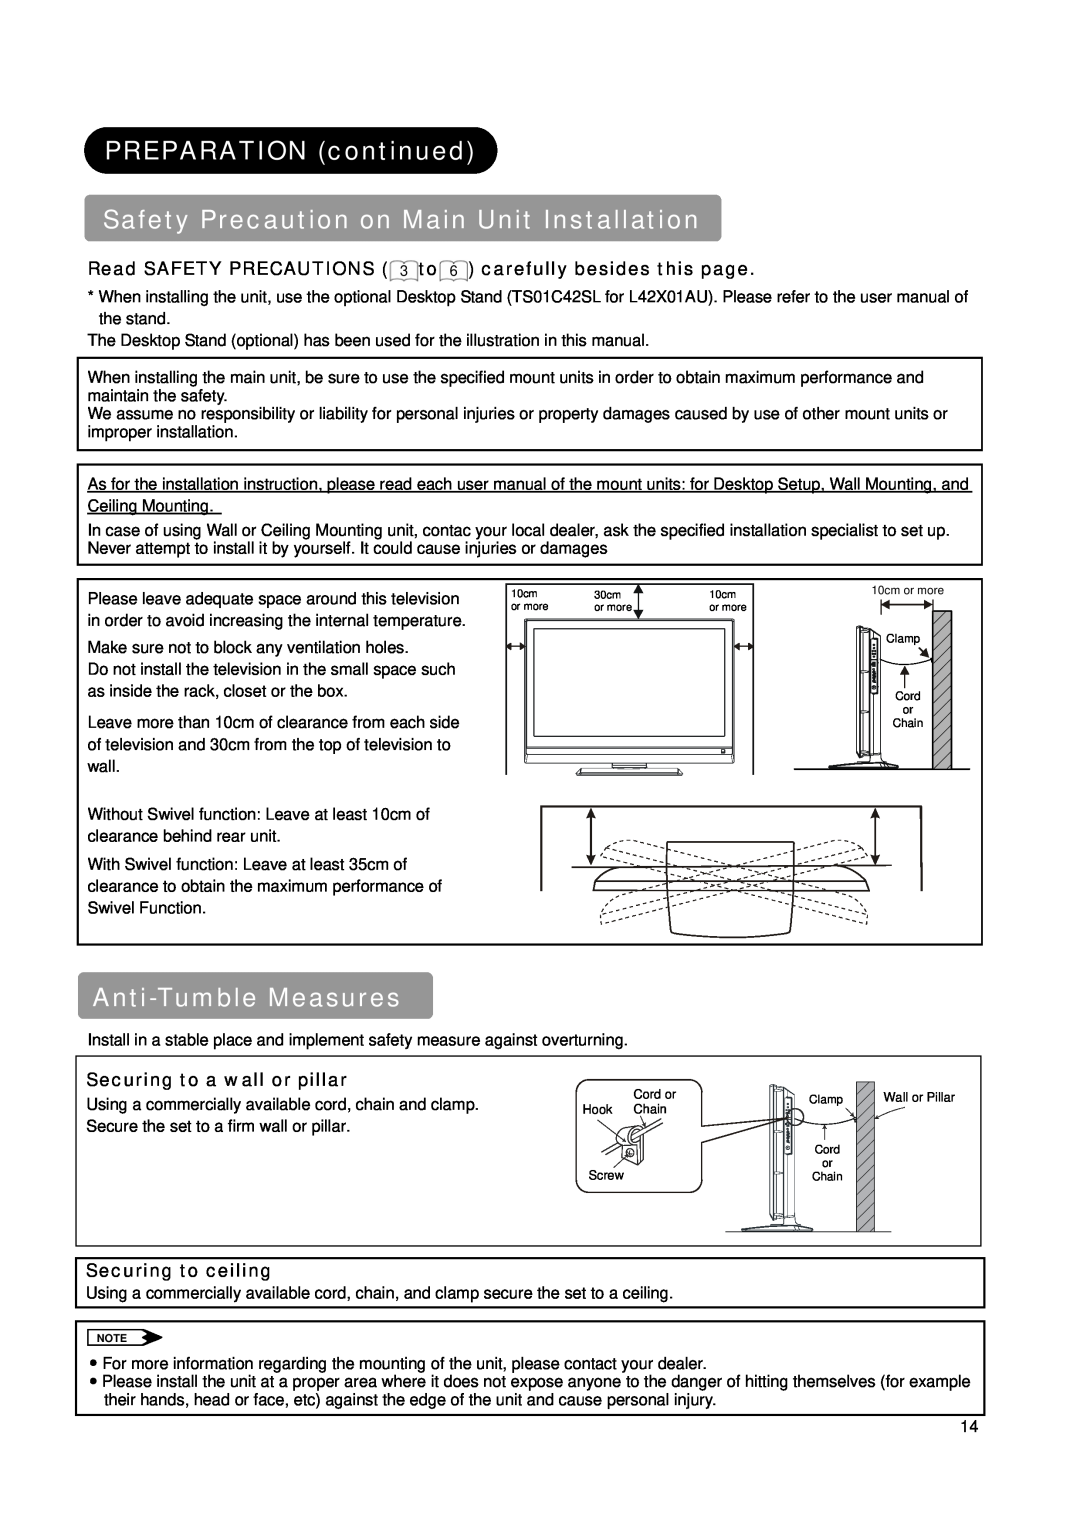 Hitachi L42X01AU, L37X01AU manual PREPARATION continued Safety Precaution on Main Unit Installation, Anti-Tumble Measures 